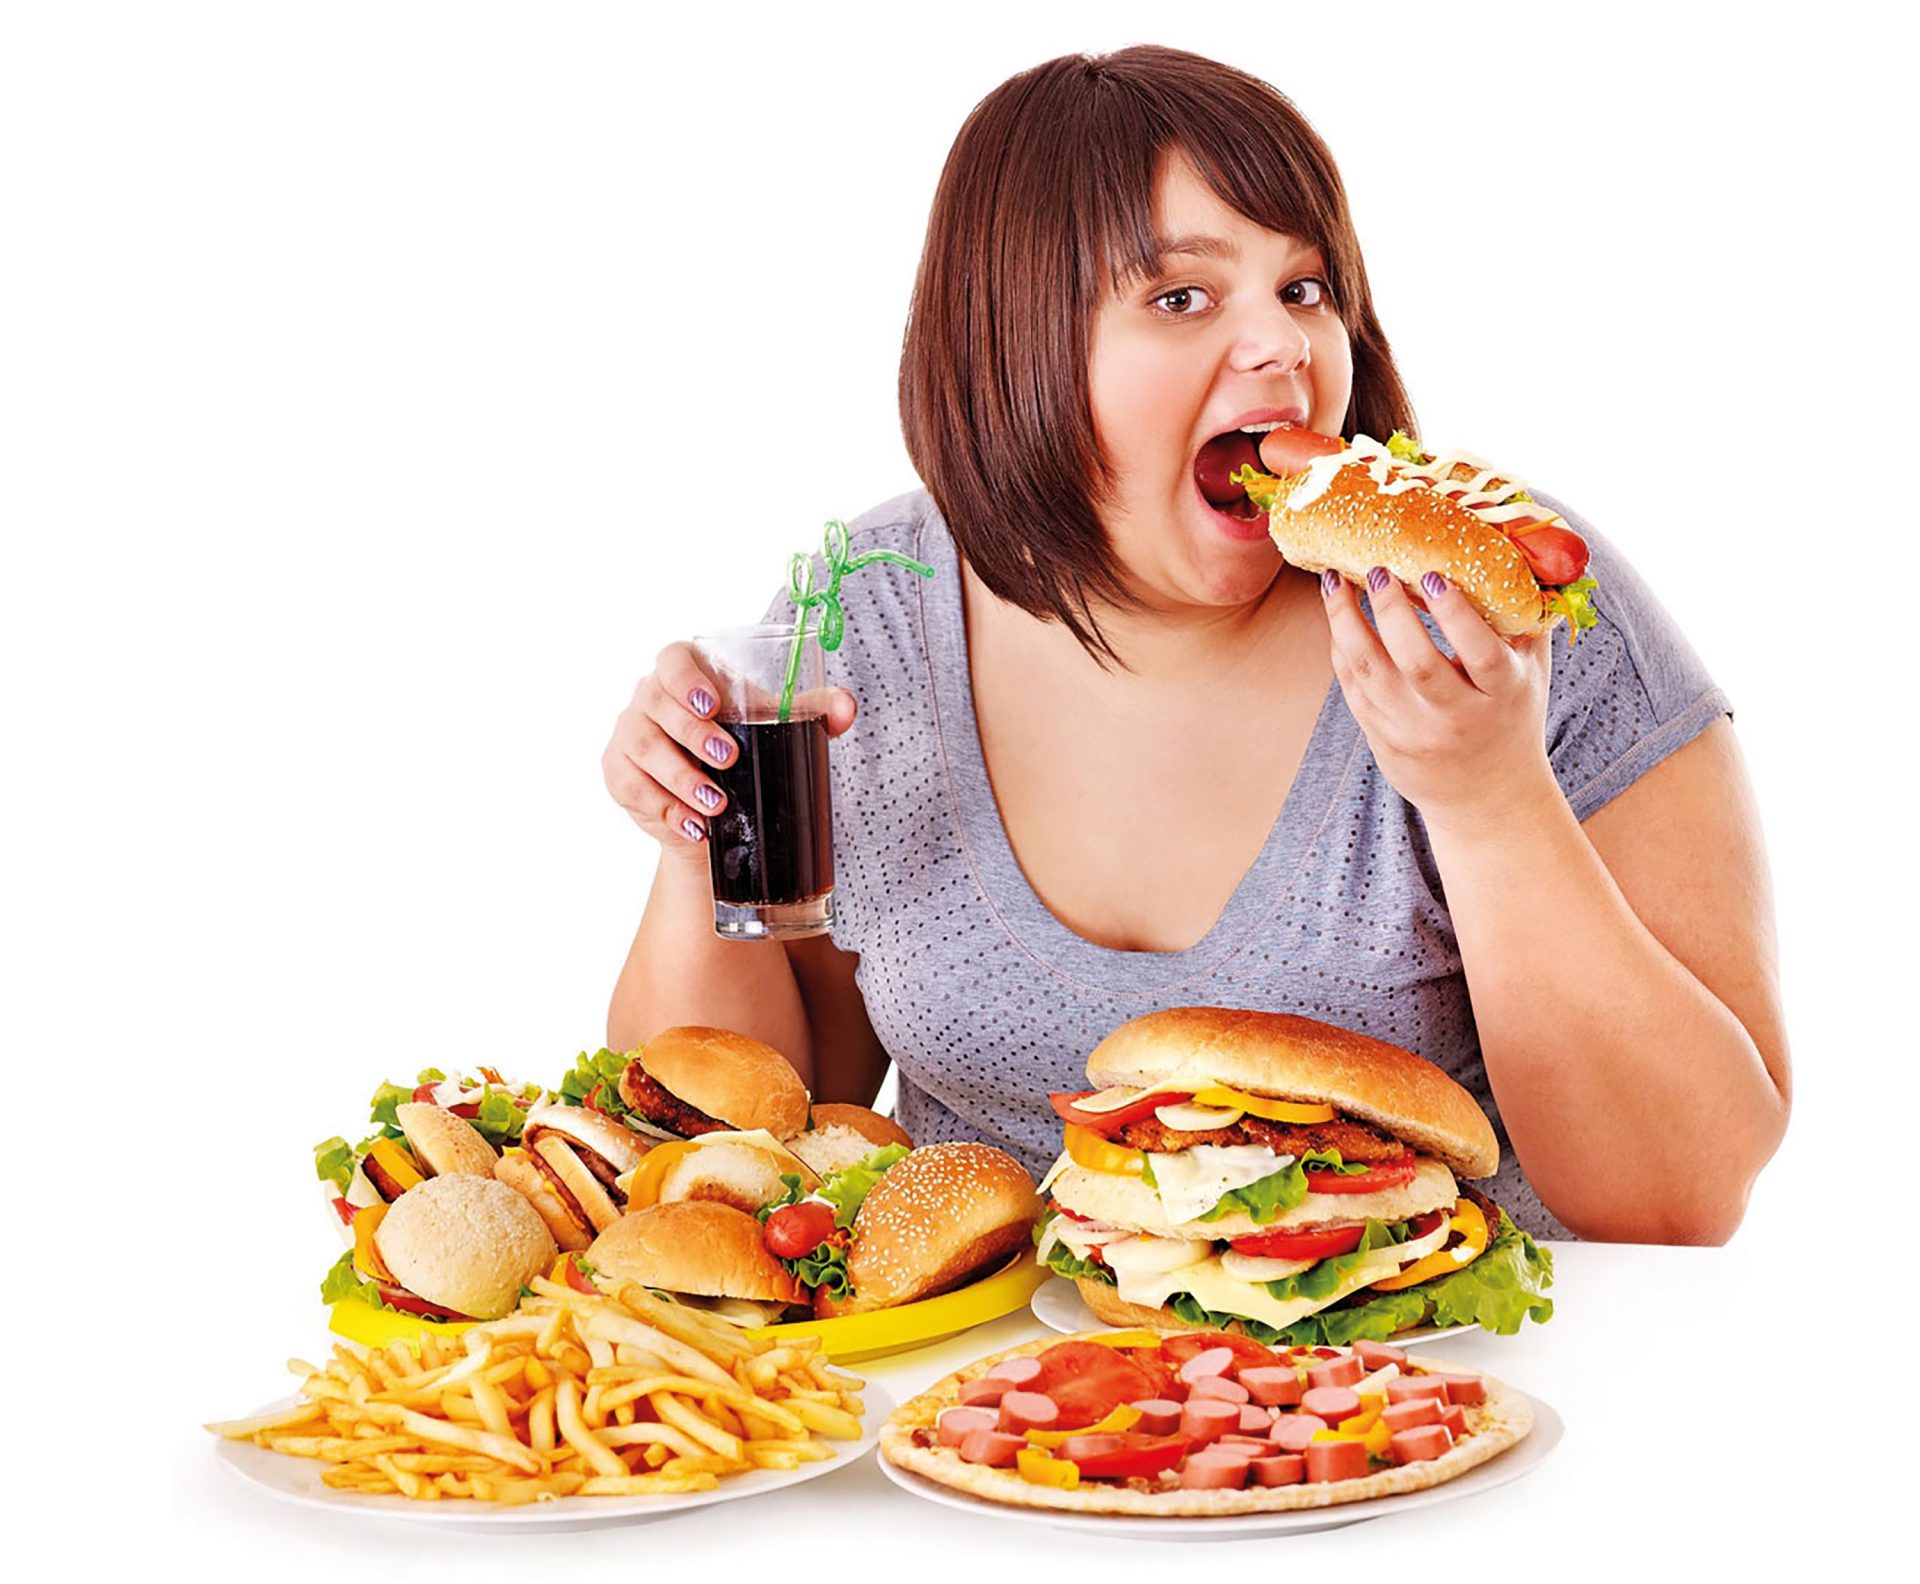 EATING HABITS